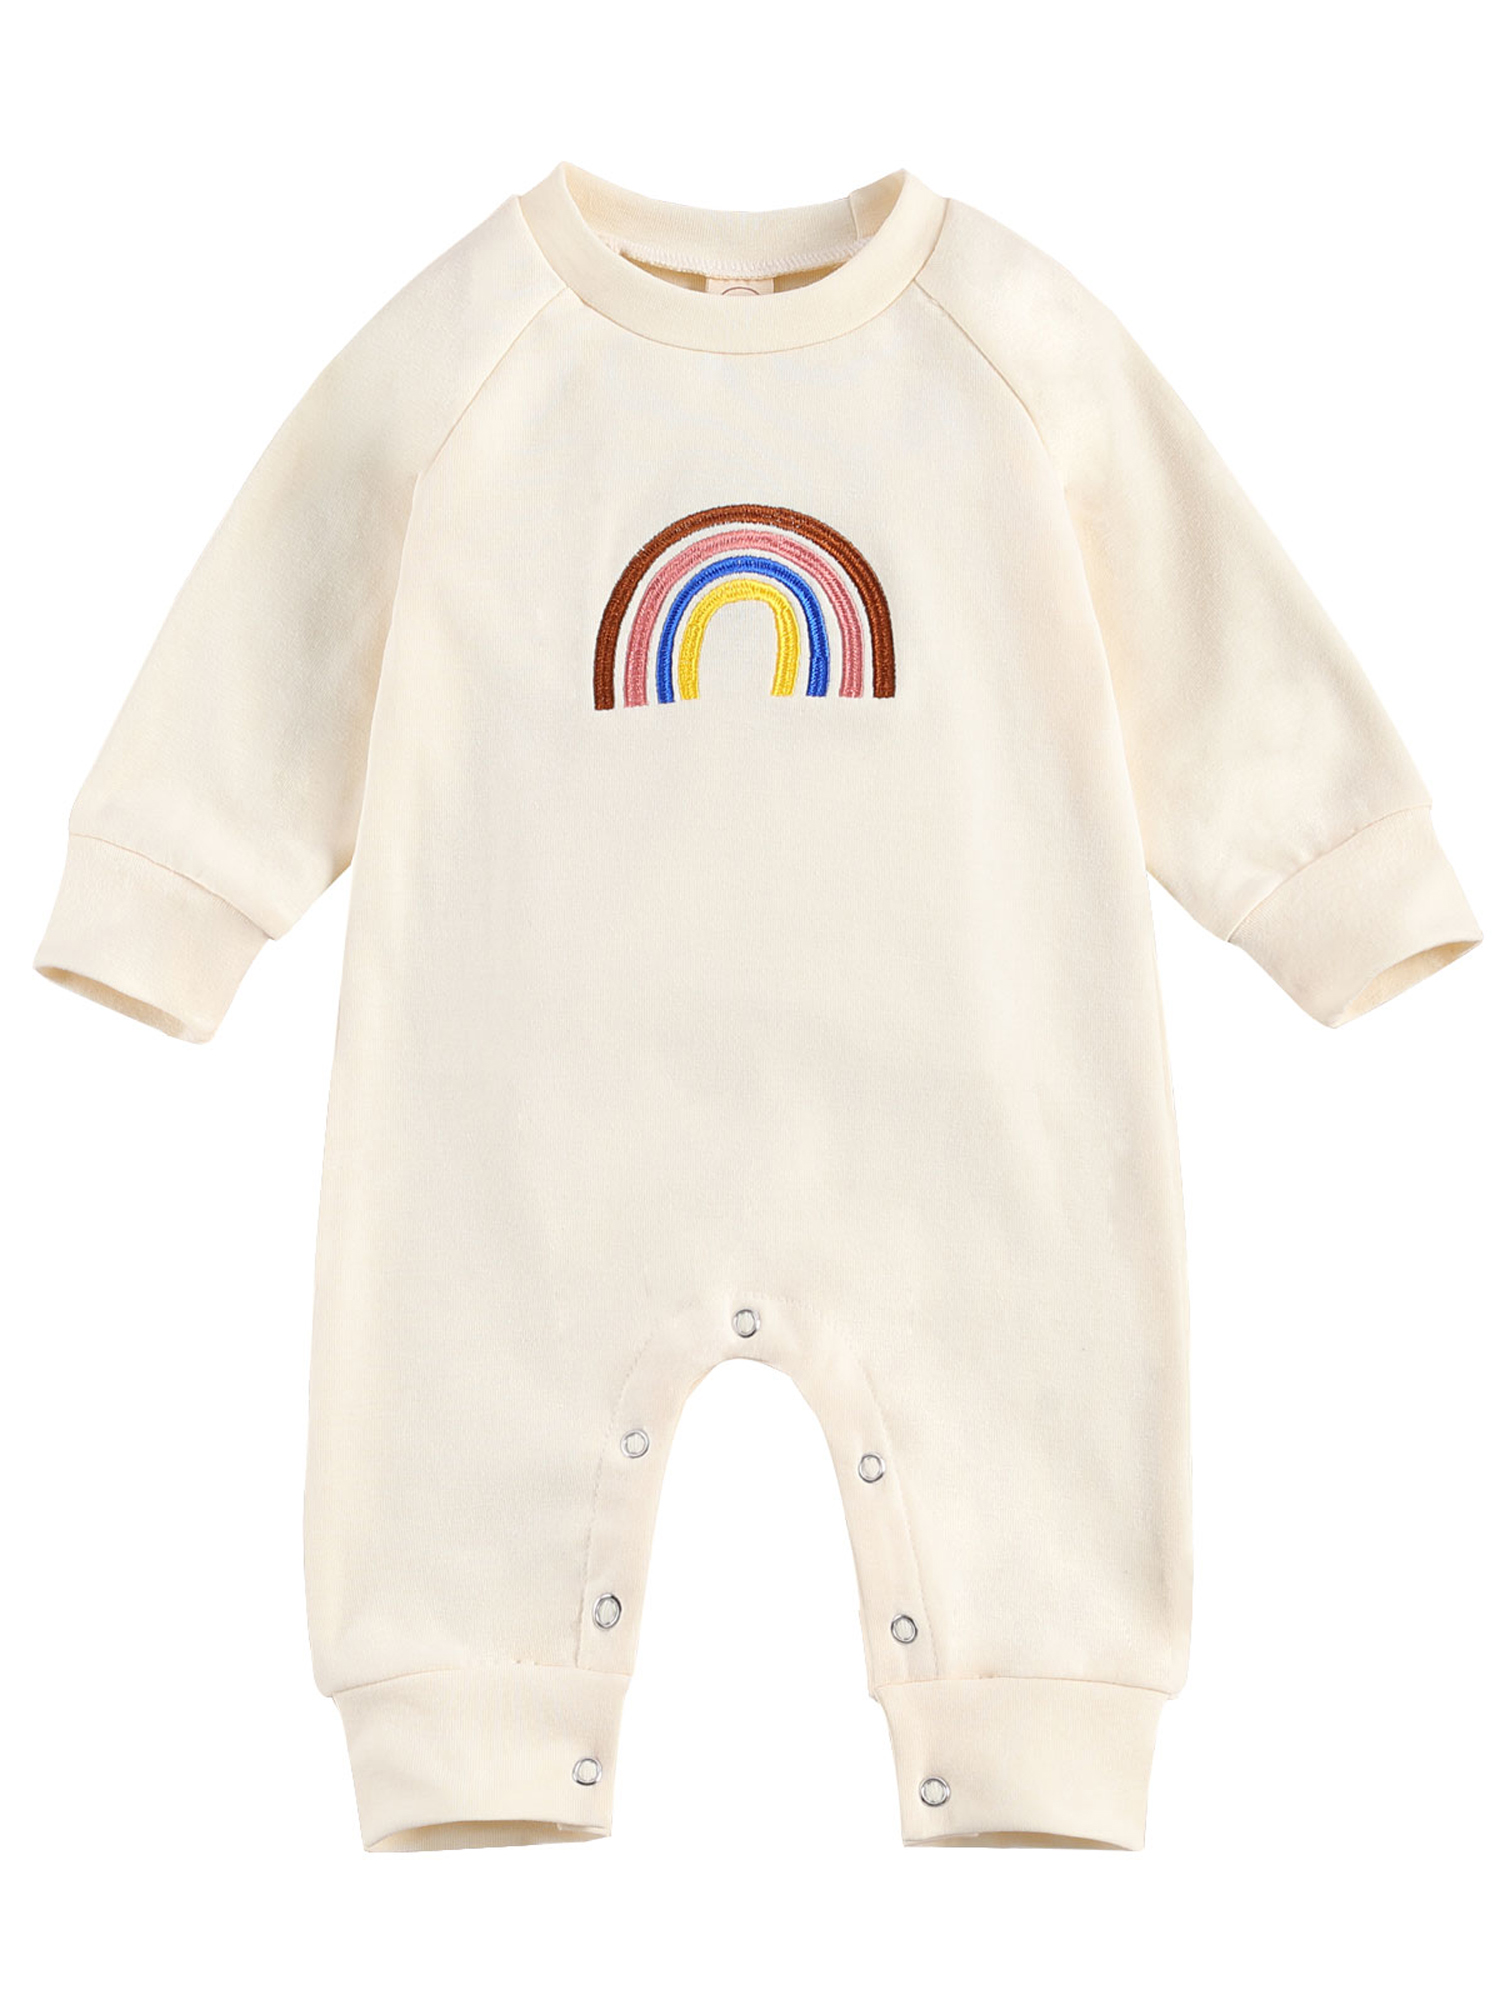 Dewadbow Newborn Baby Boys Girls Rainbow Print Romper Toddler Outfits - image 1 of 6